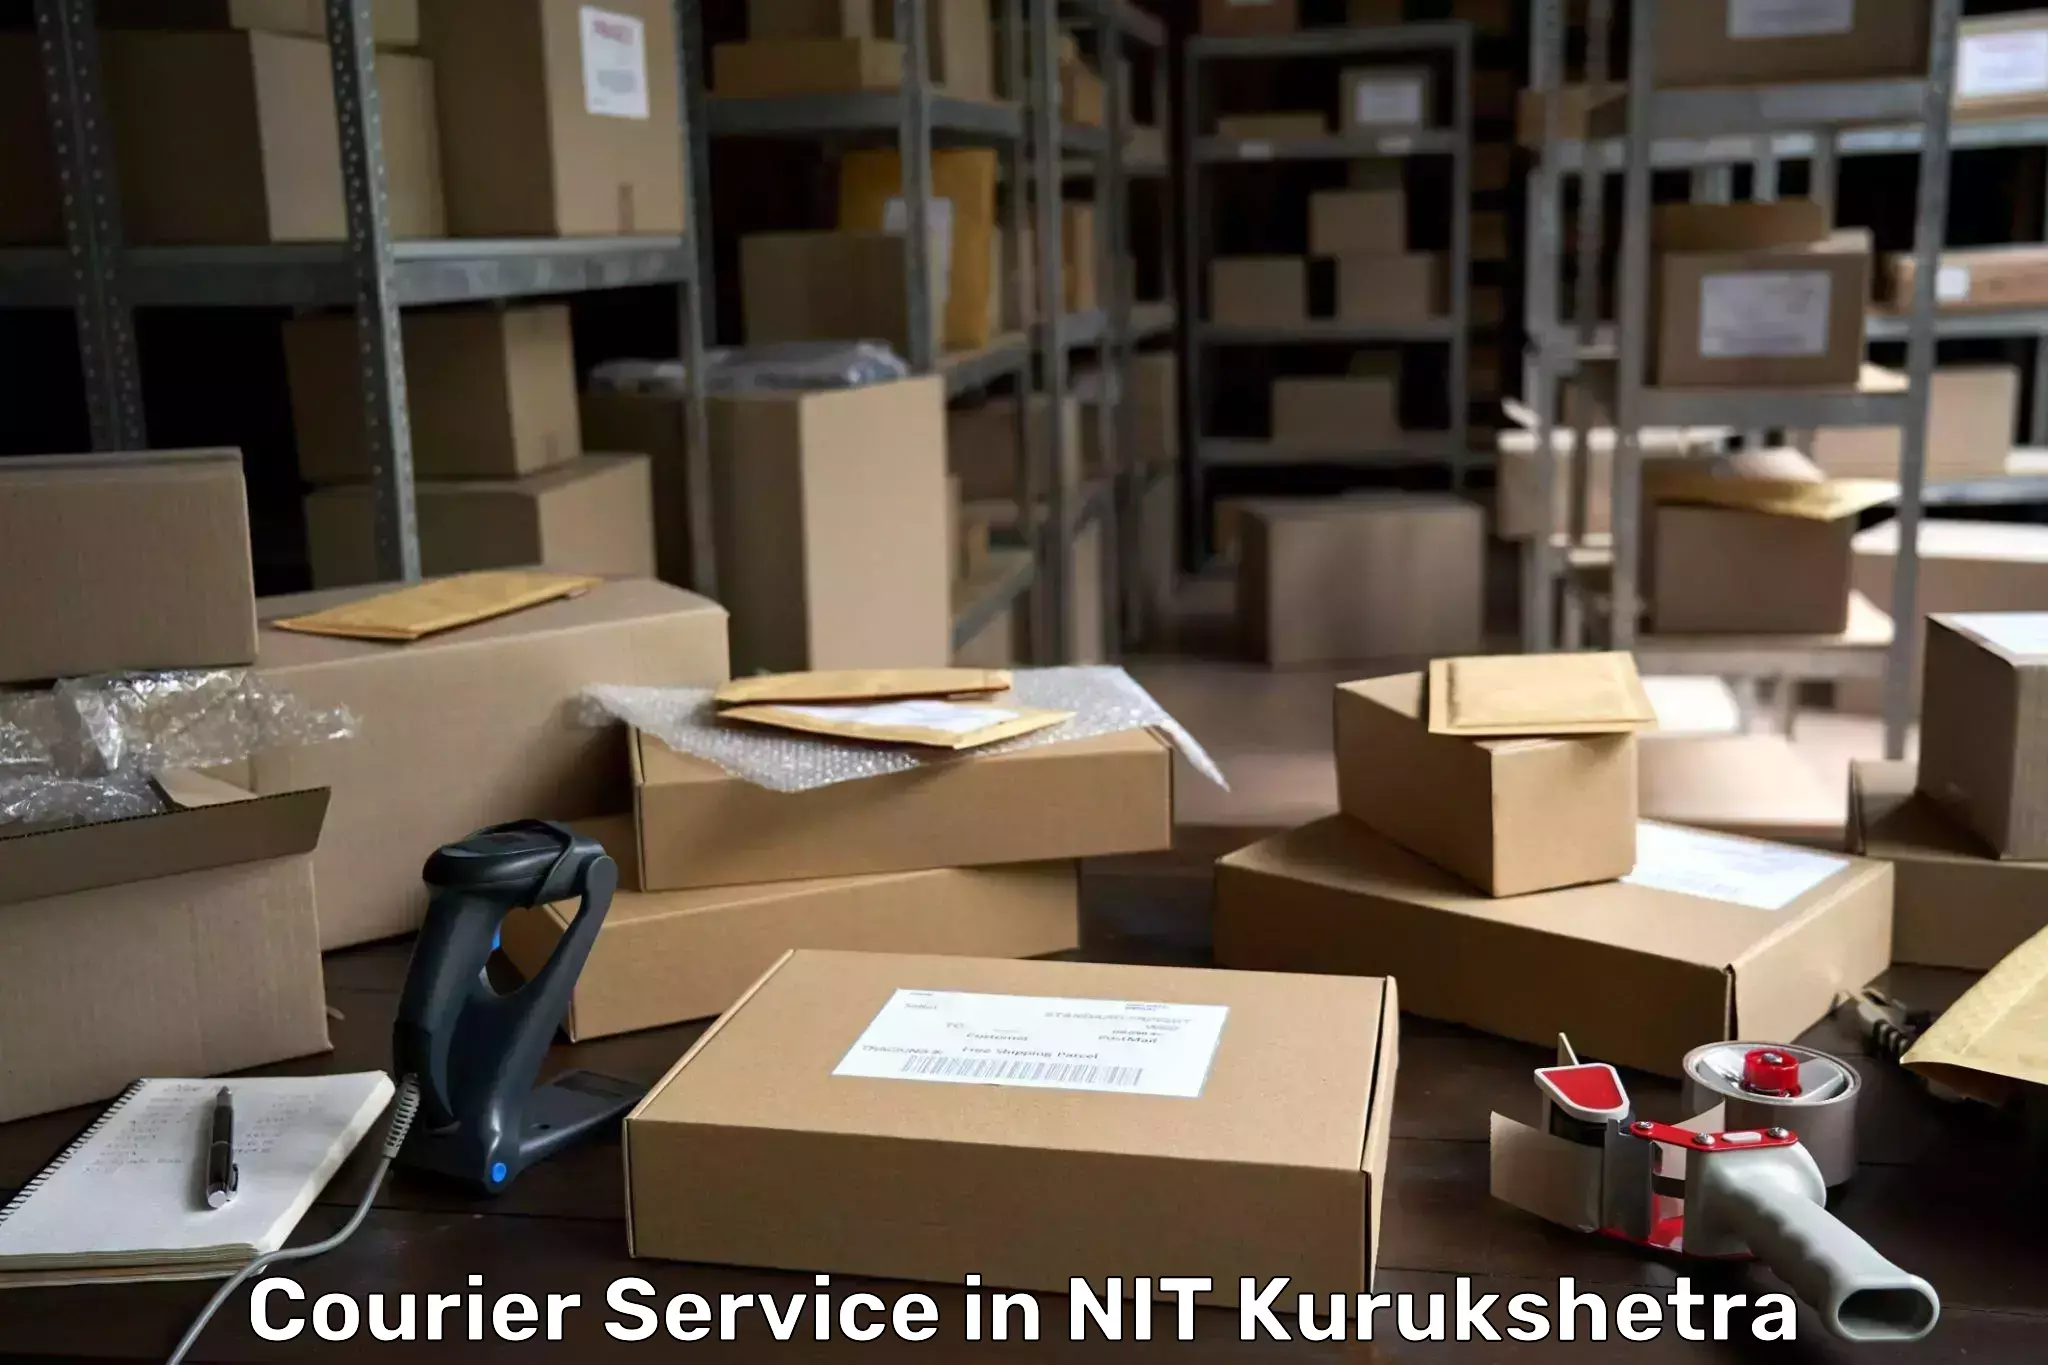 Streamlined delivery processes in NIT Kurukshetra